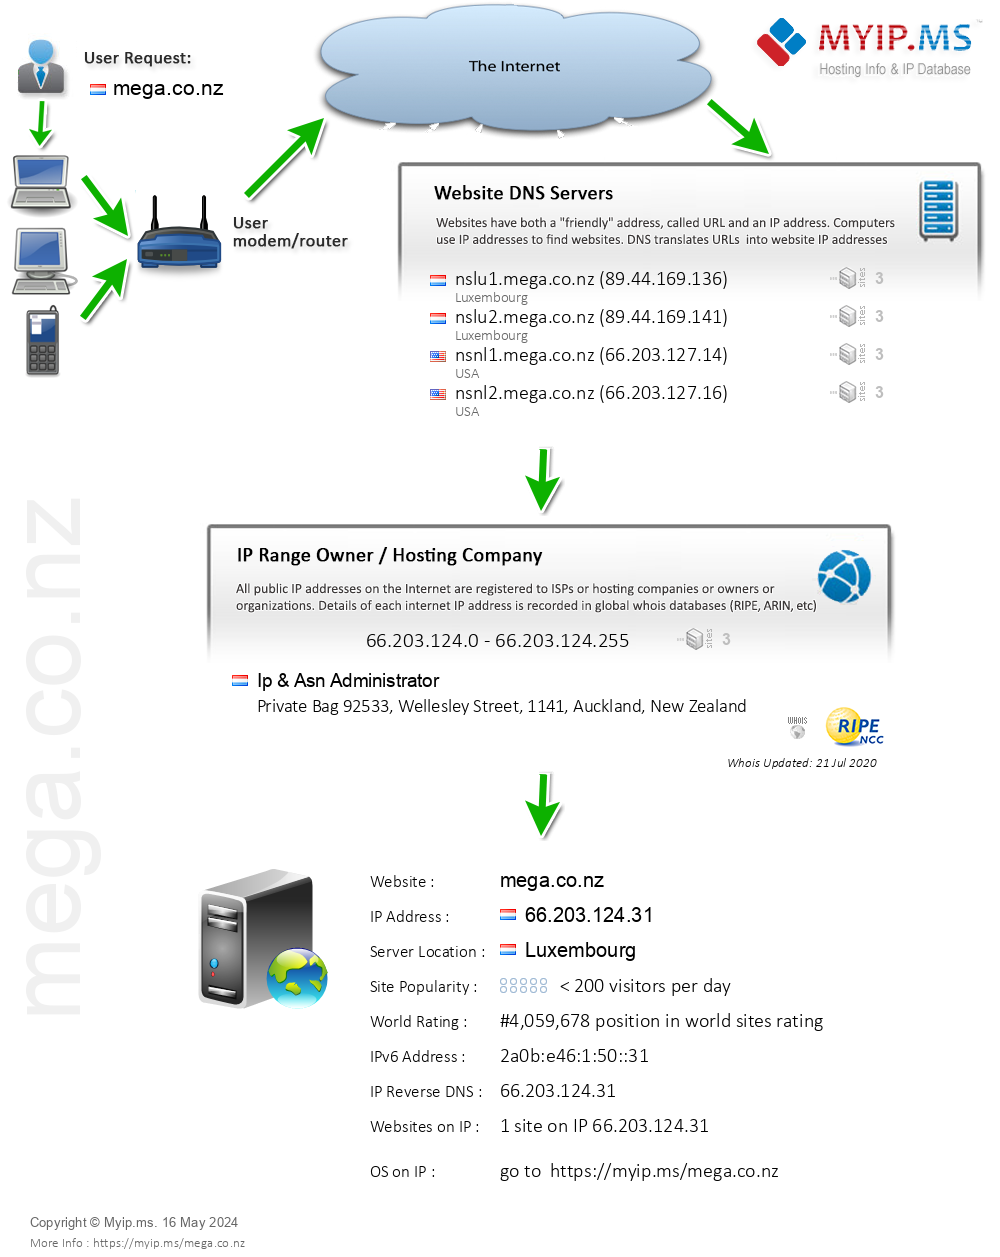 Mega.co.nz - Website Hosting Visual IP Diagram